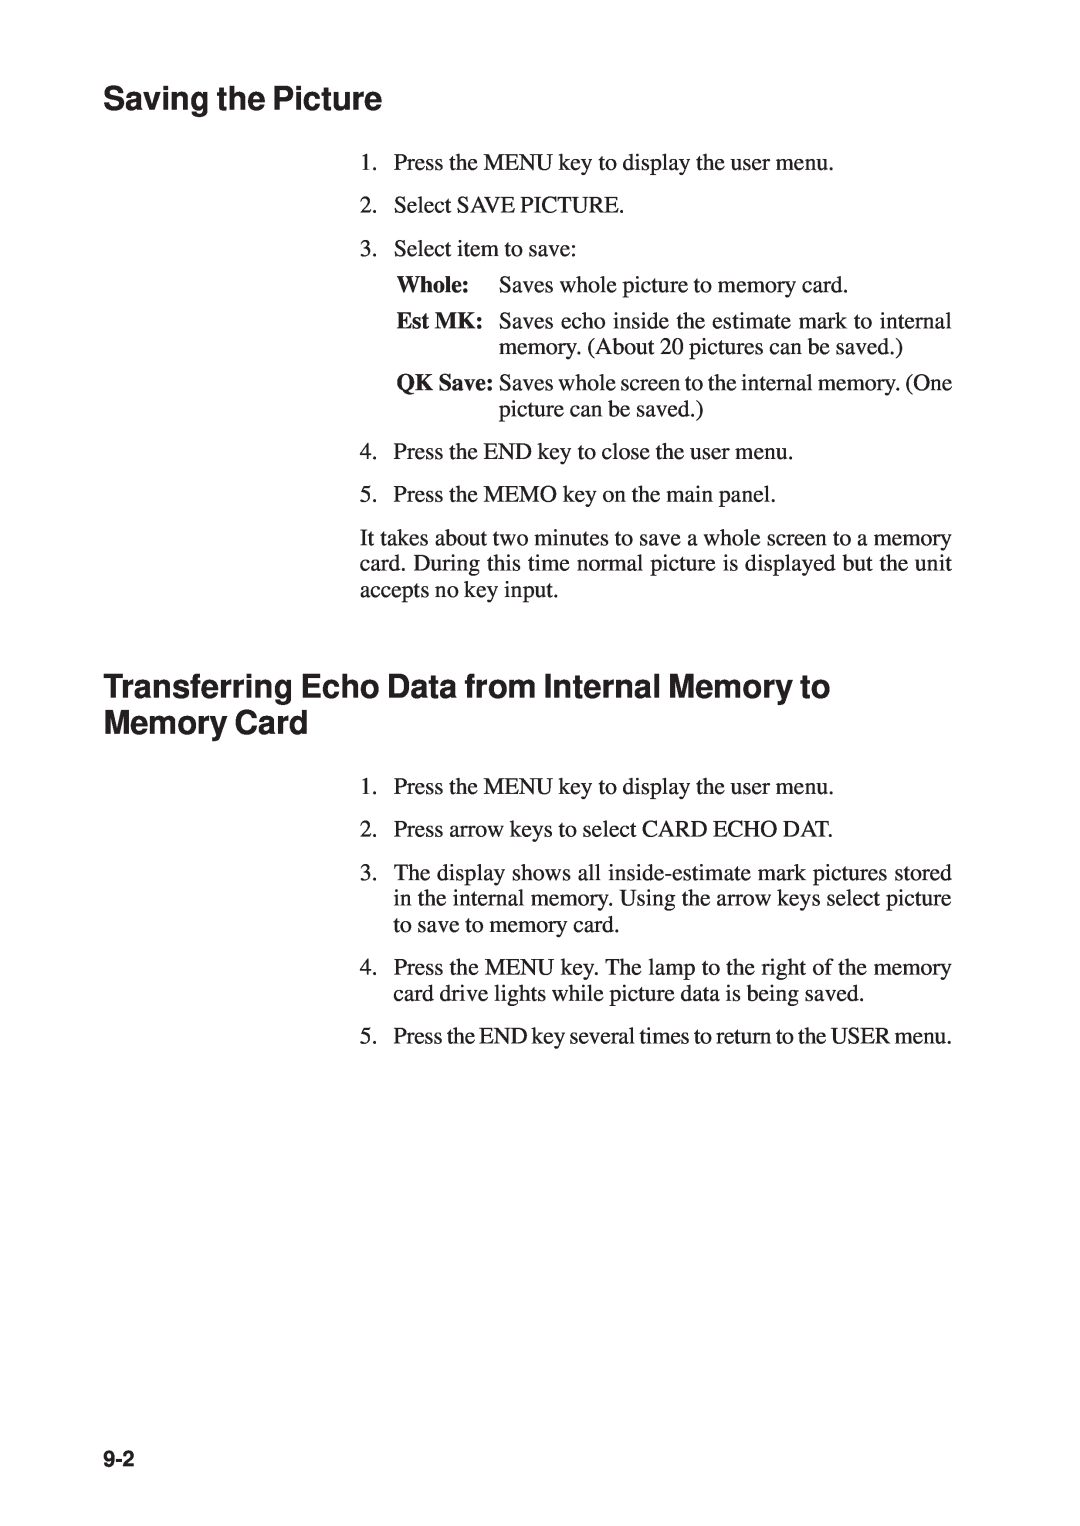 Furuno CSH-53 manual Saving the Picture, Transferring Echo Data from Internal Memory to Memory Card 